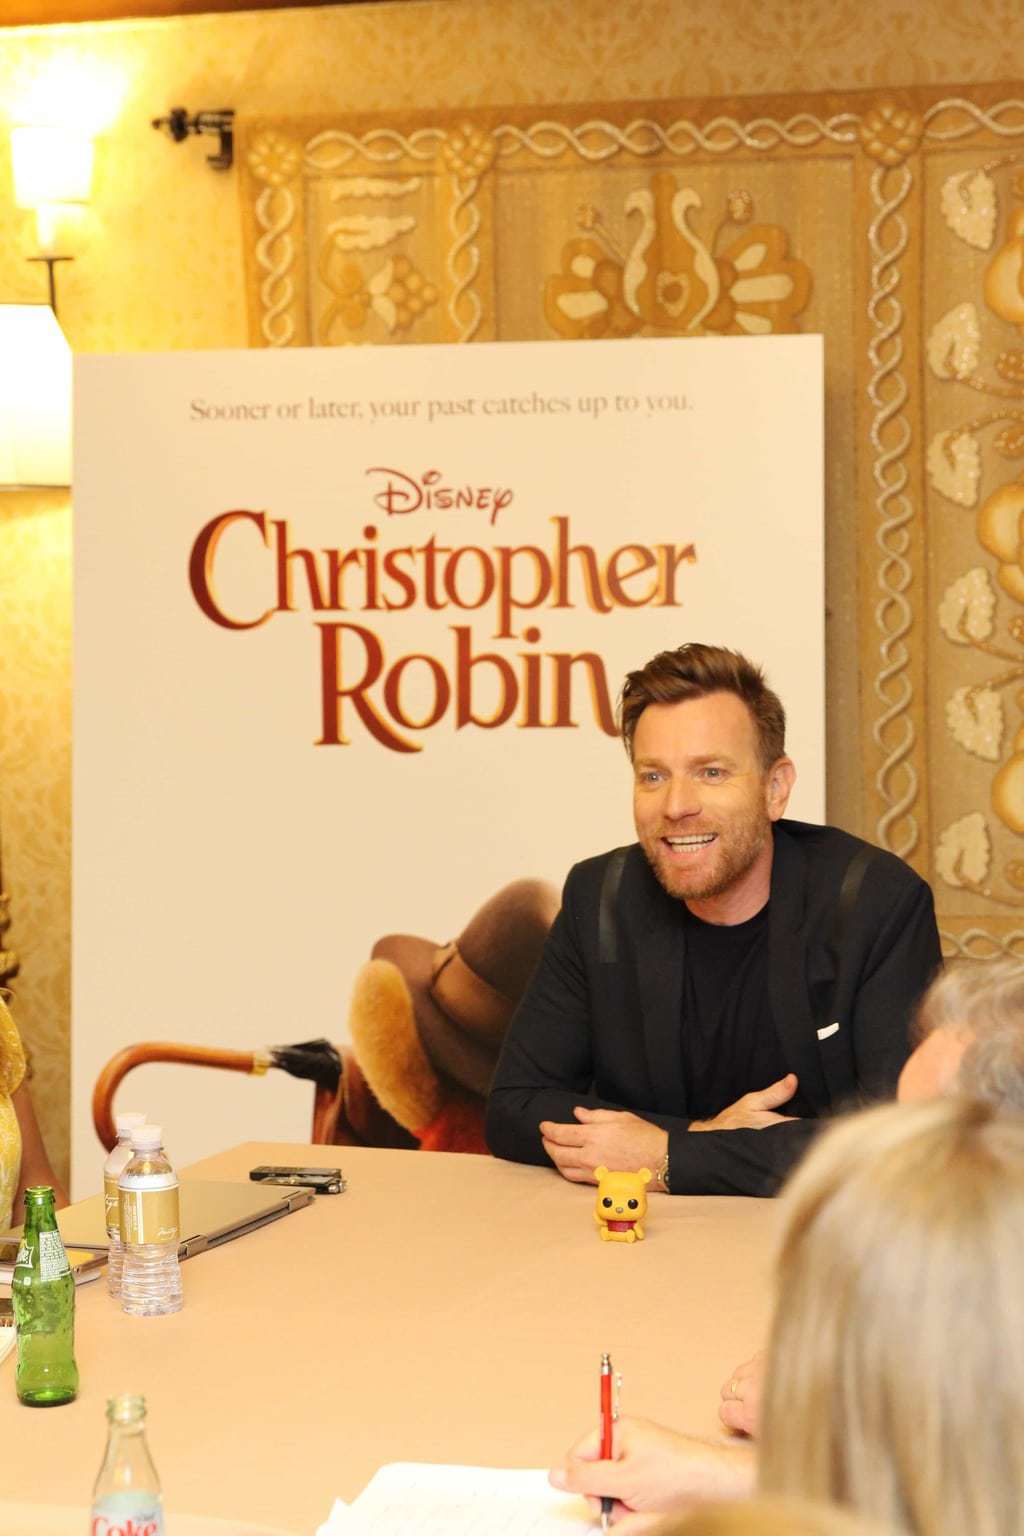 Interview With Ewan McGregor, Ewan McGregor Interview, Disney's Christopher Robin movie, Ewan McGregor as Christopher Robin